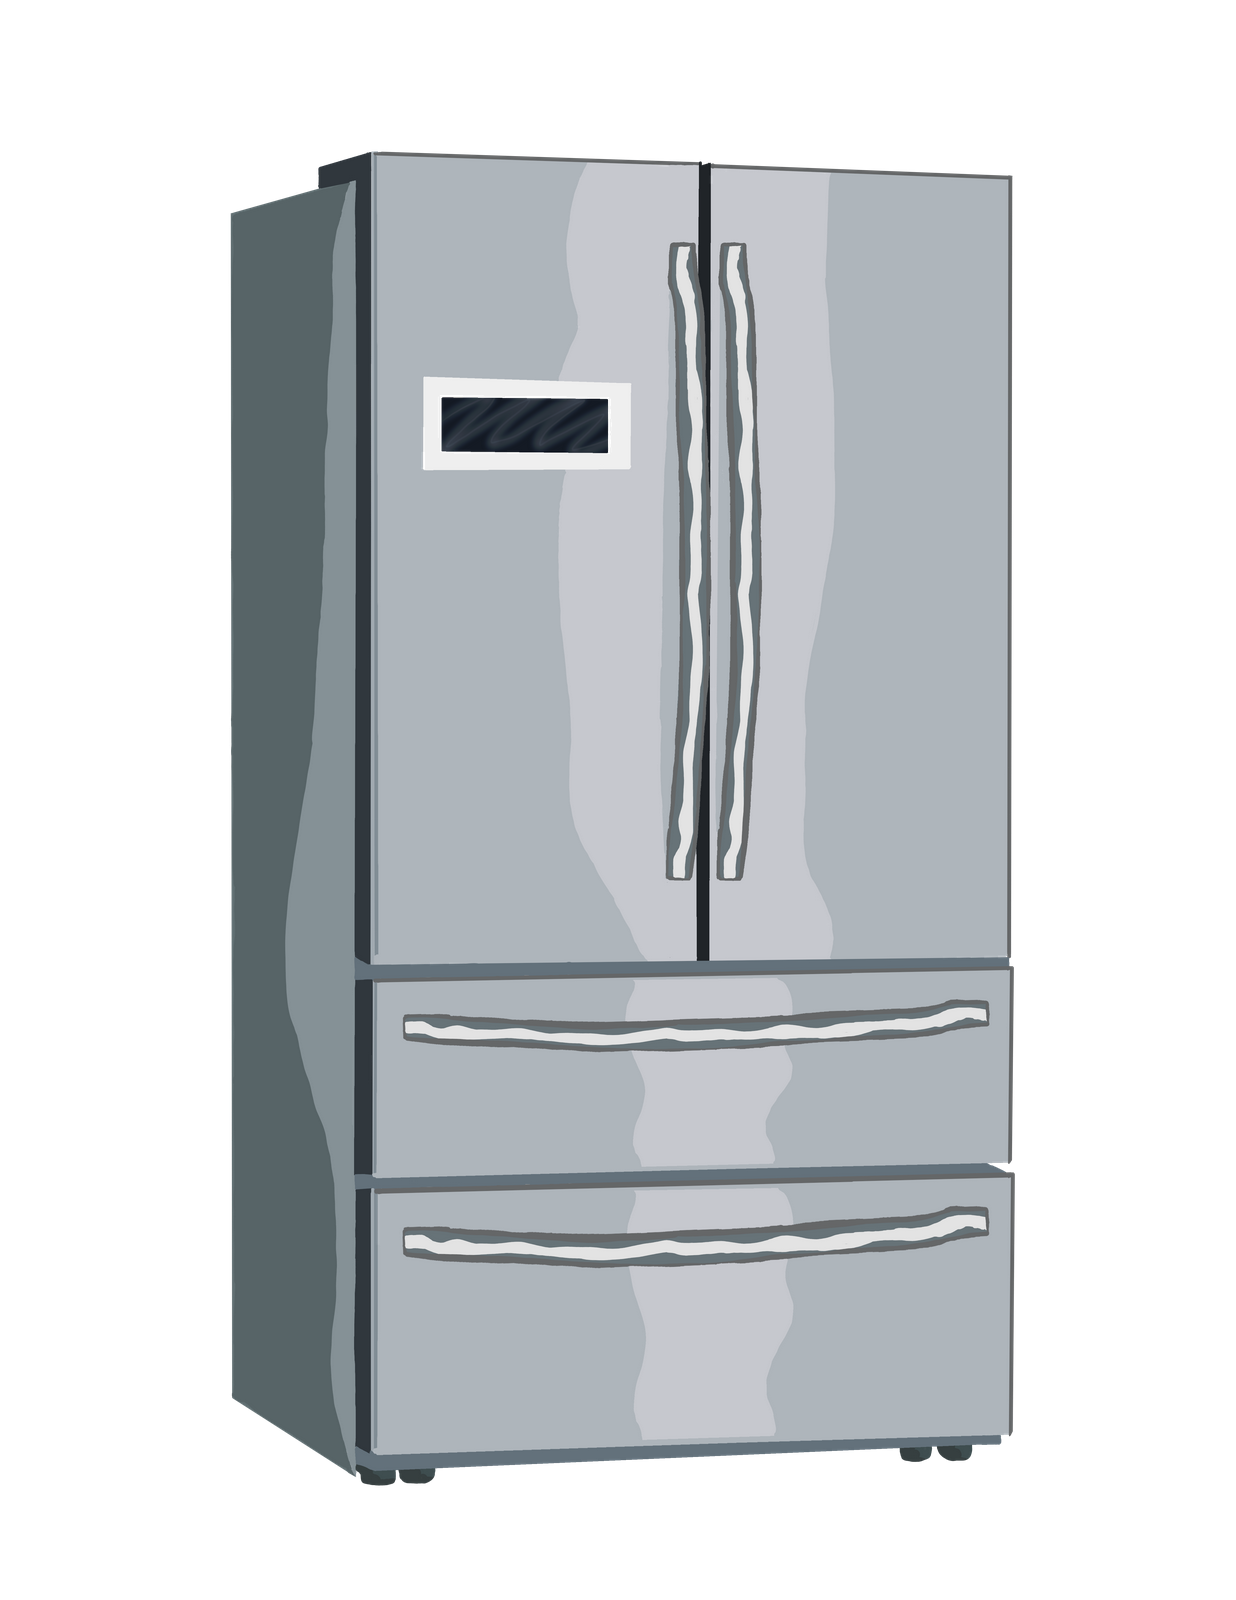 Maytag Refrigerator Repair In Montreal